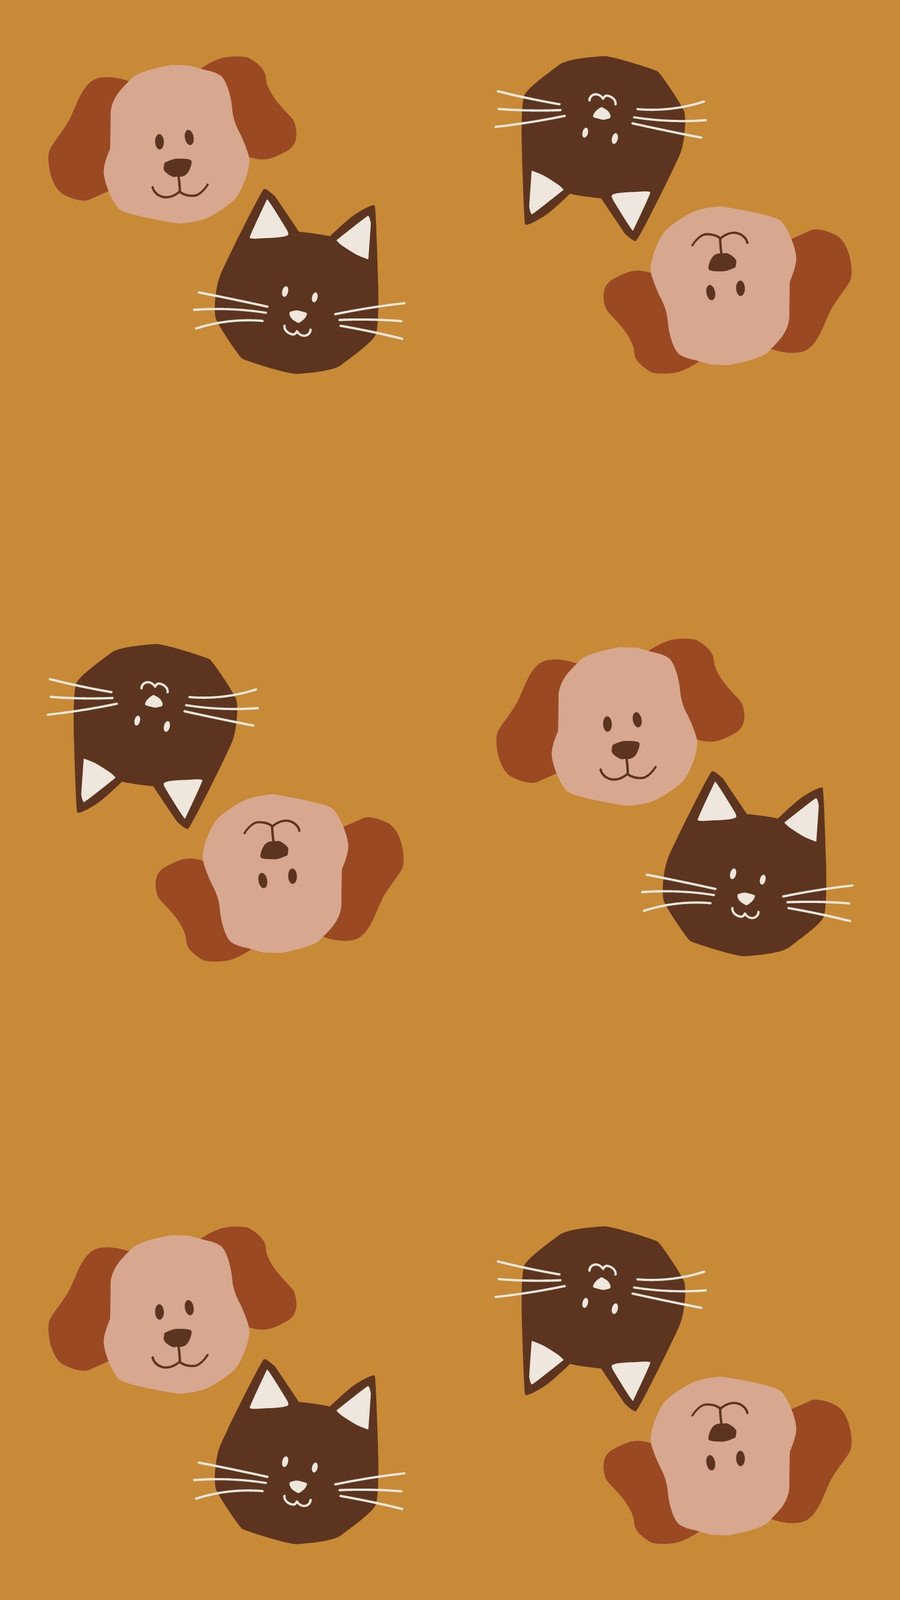 40 Cute Cartoon Dog Wallpapers  Download at WallpaperBro  Dog wallpaper  iphone Wallpaper iphone cute Cute cartoon wallpapers